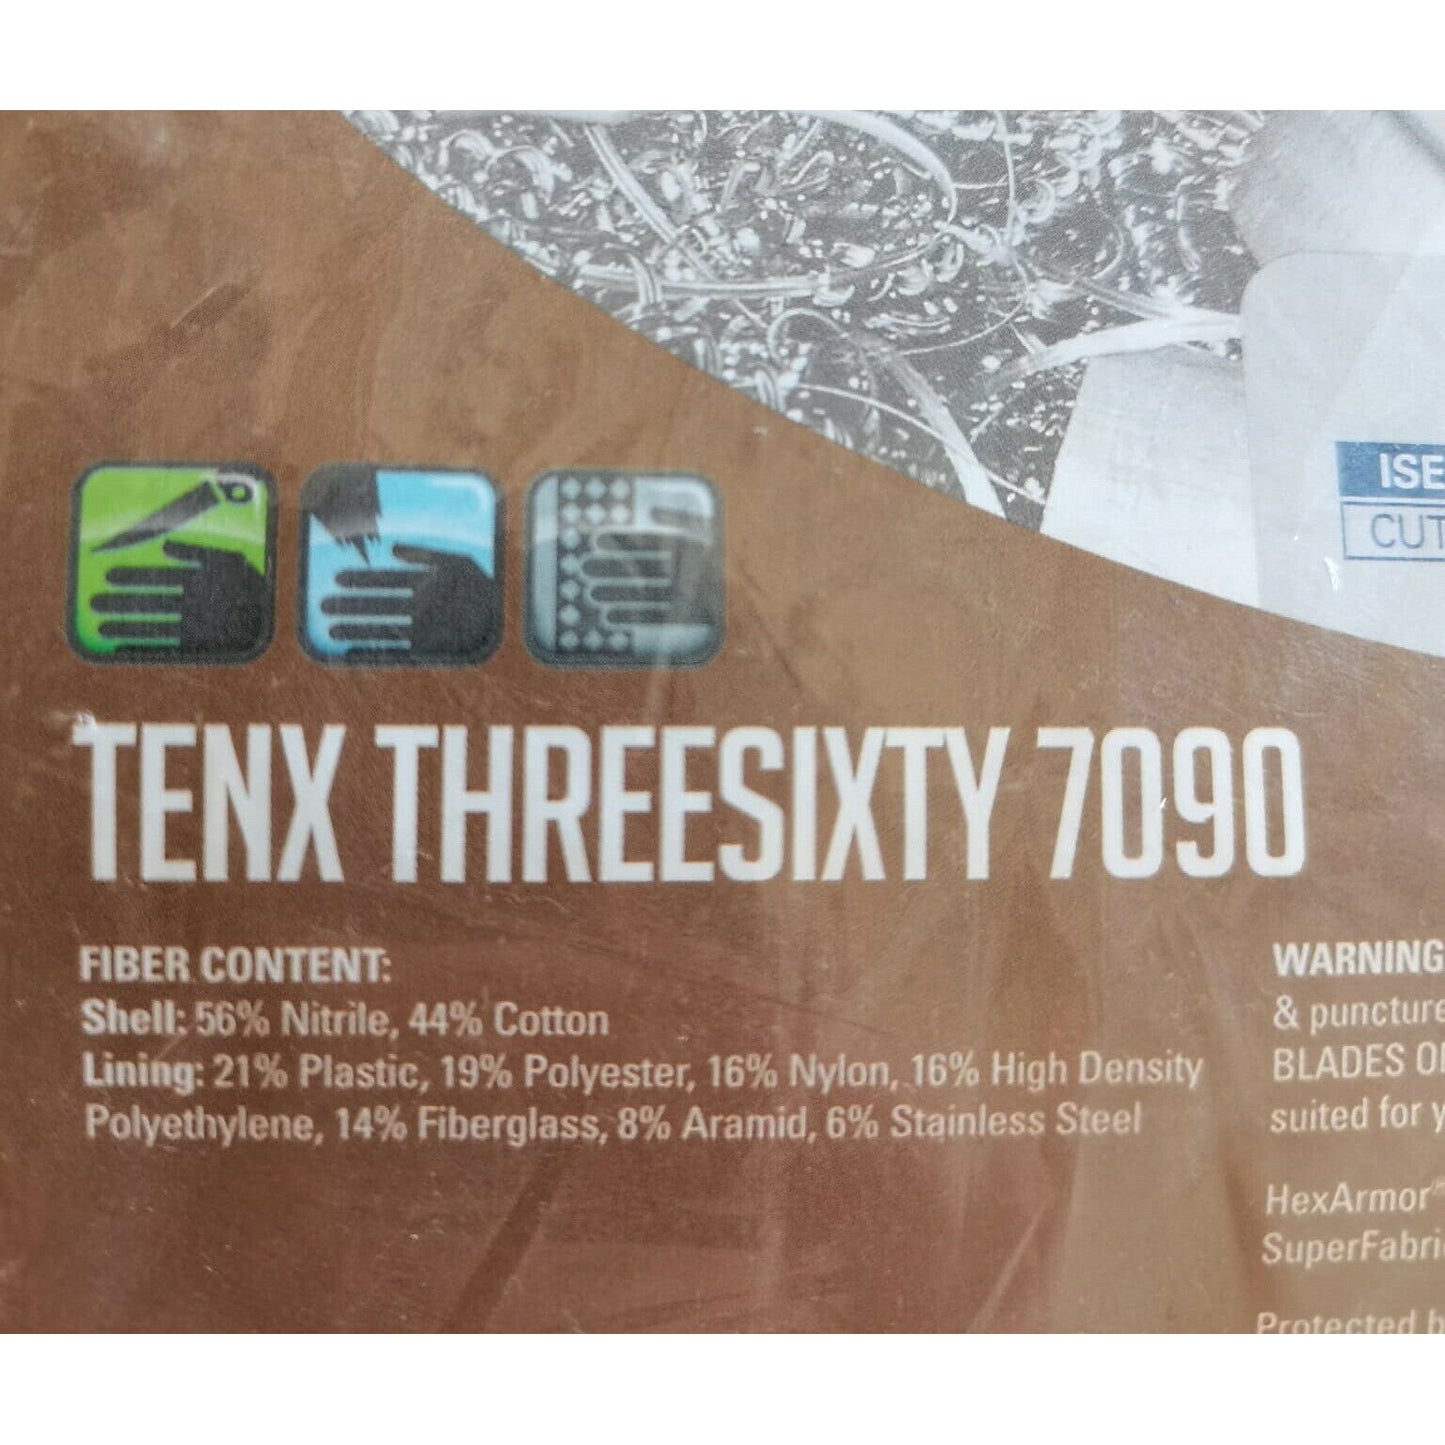 Tenx Threesixty 7090